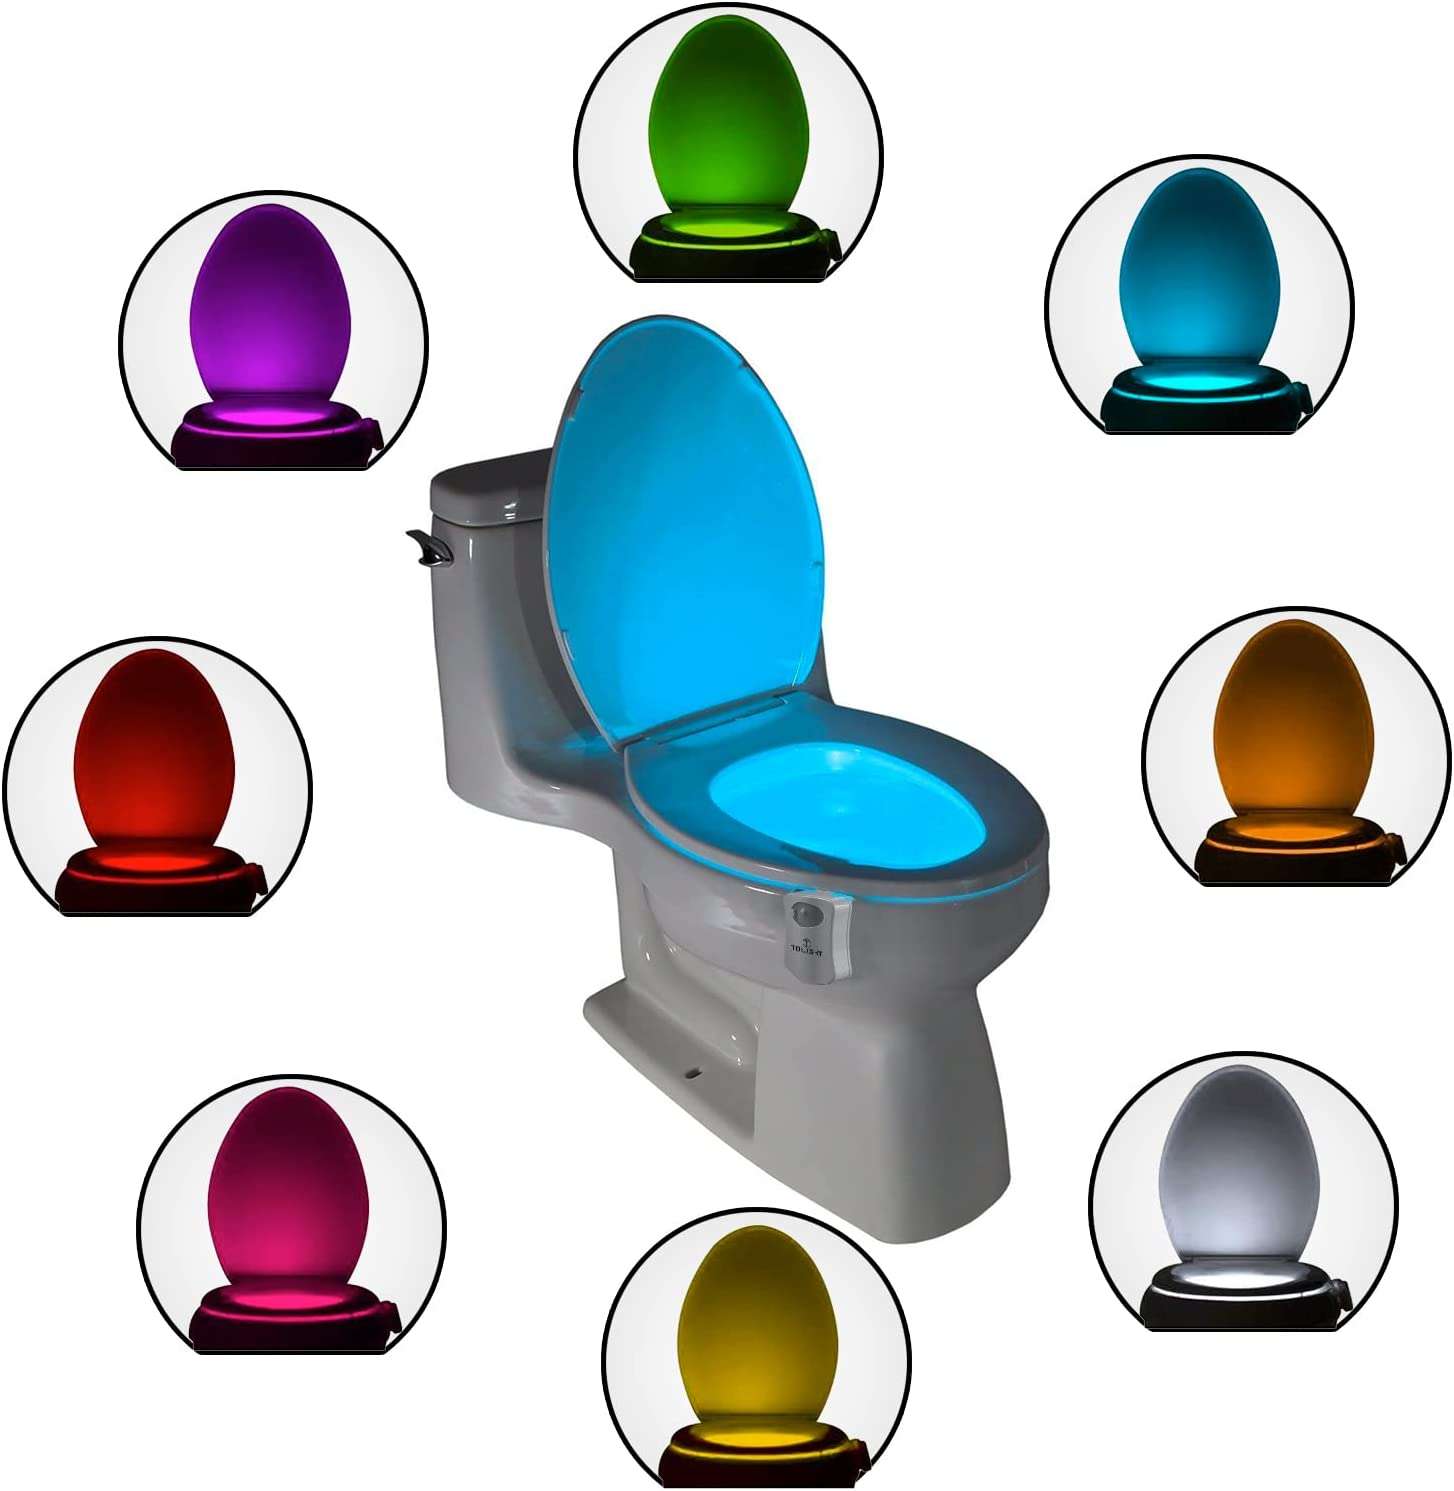 Chunace Toilet Night Lights 4 Pack - Motion Sensor Activated LED Bowl Lamp  for Bathroom Illumination…See more Chunace Toilet Night Lights 4 Pack 